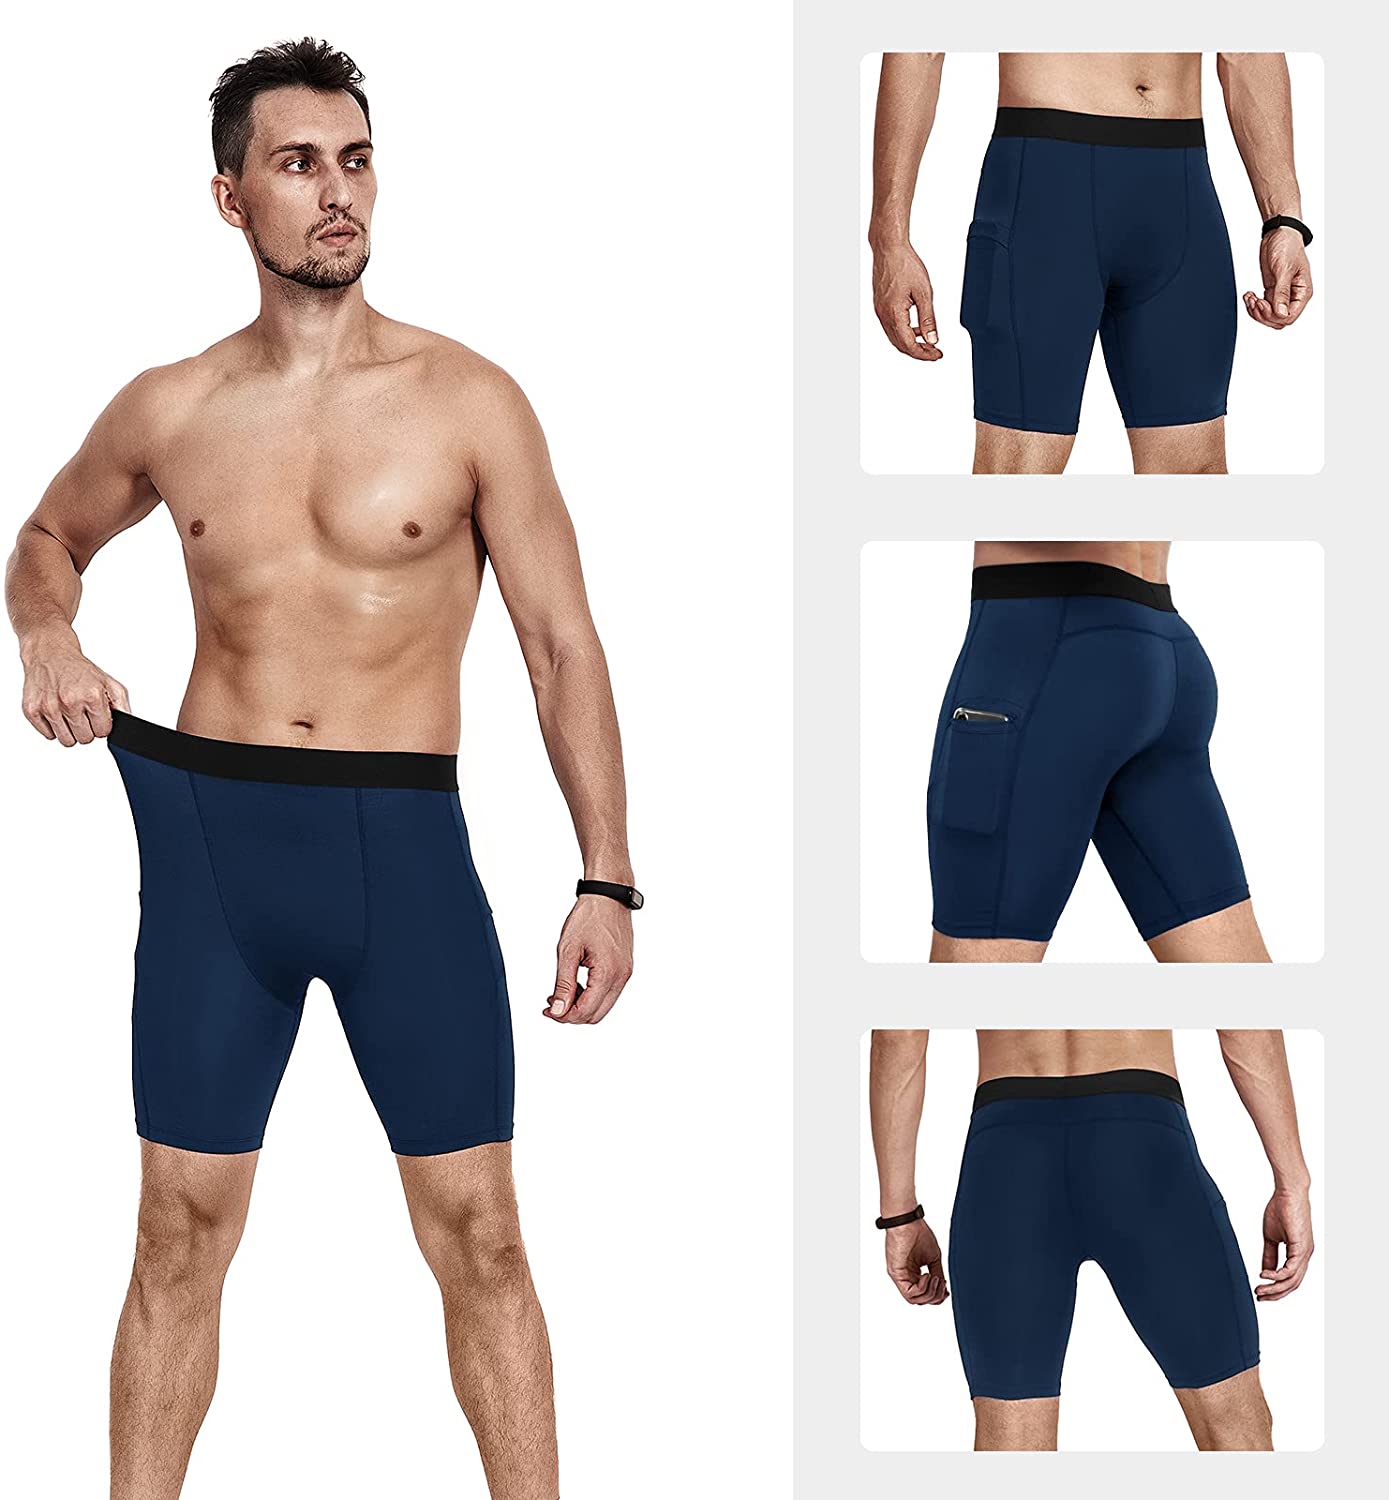  Men's Sports Compression Shorts - Men's Sports Compression  Shorts / Men's Base L: Clothing, Shoes & Jewelry